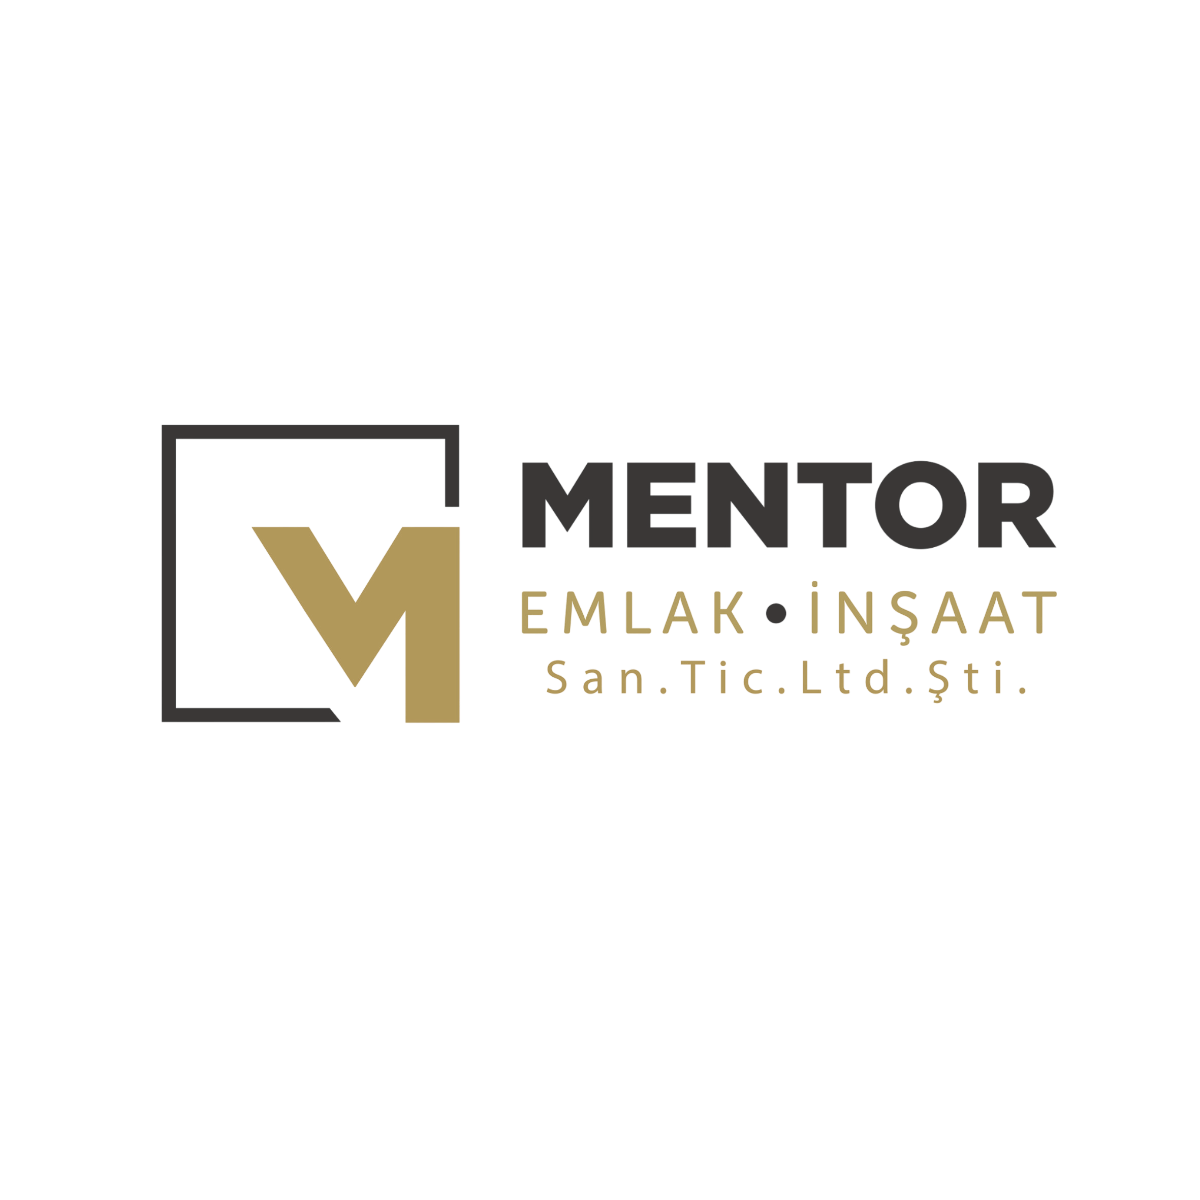 Mentor Emlak İnşaat San.Tic.Ltd.Şti.